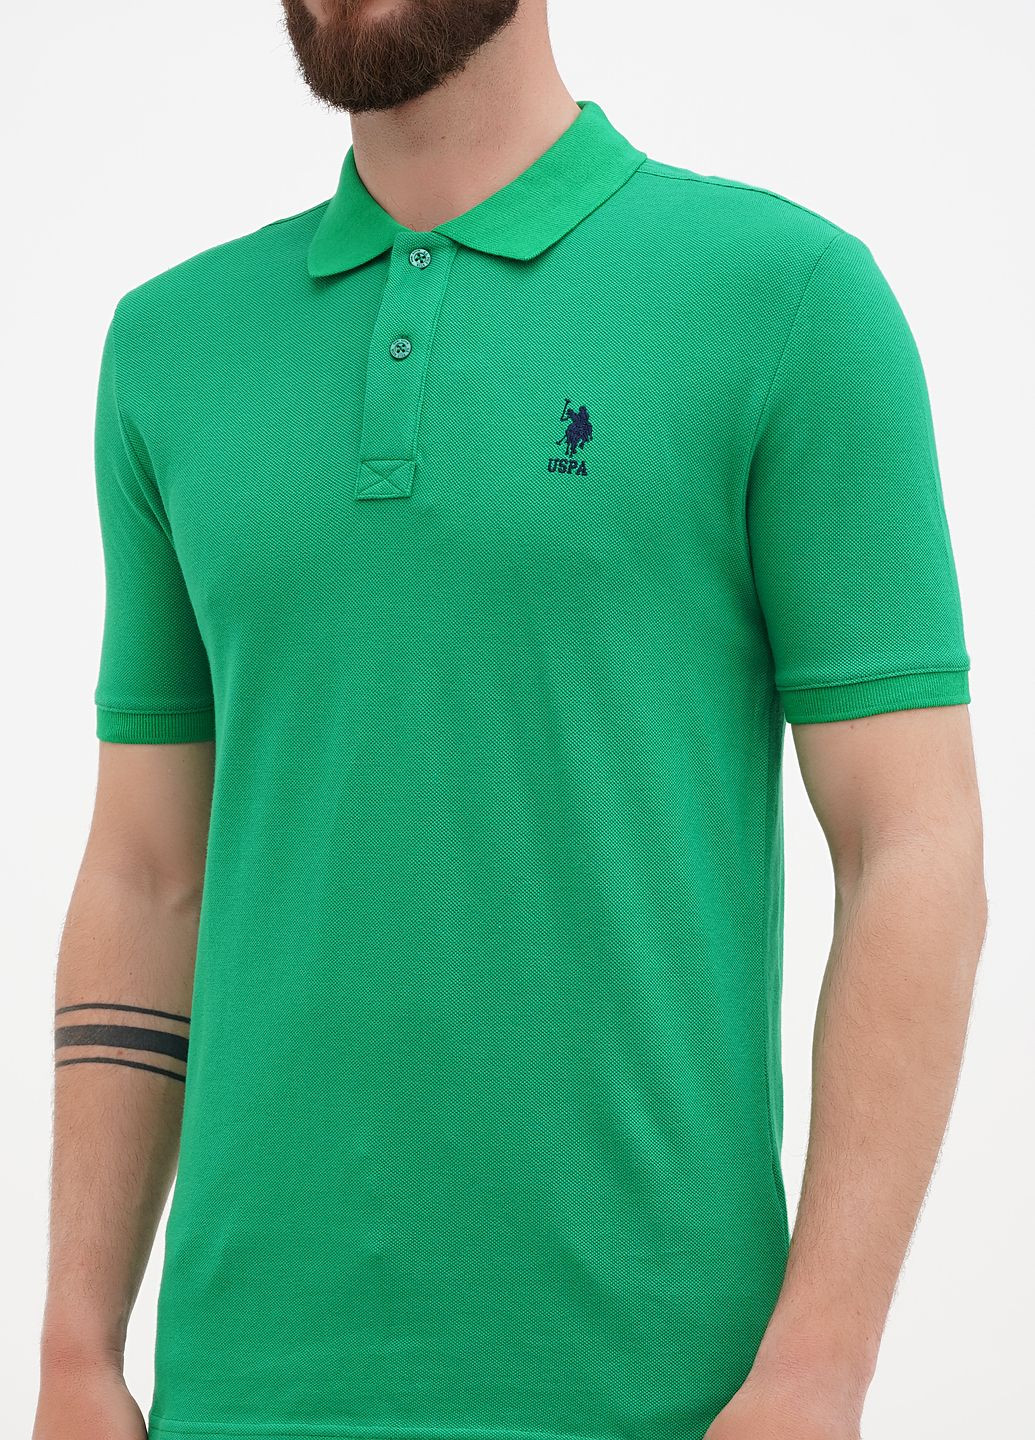 Зеленая футболка-футболка поло u.s. polo assn мужская для мужчин U.S. Polo Assn.